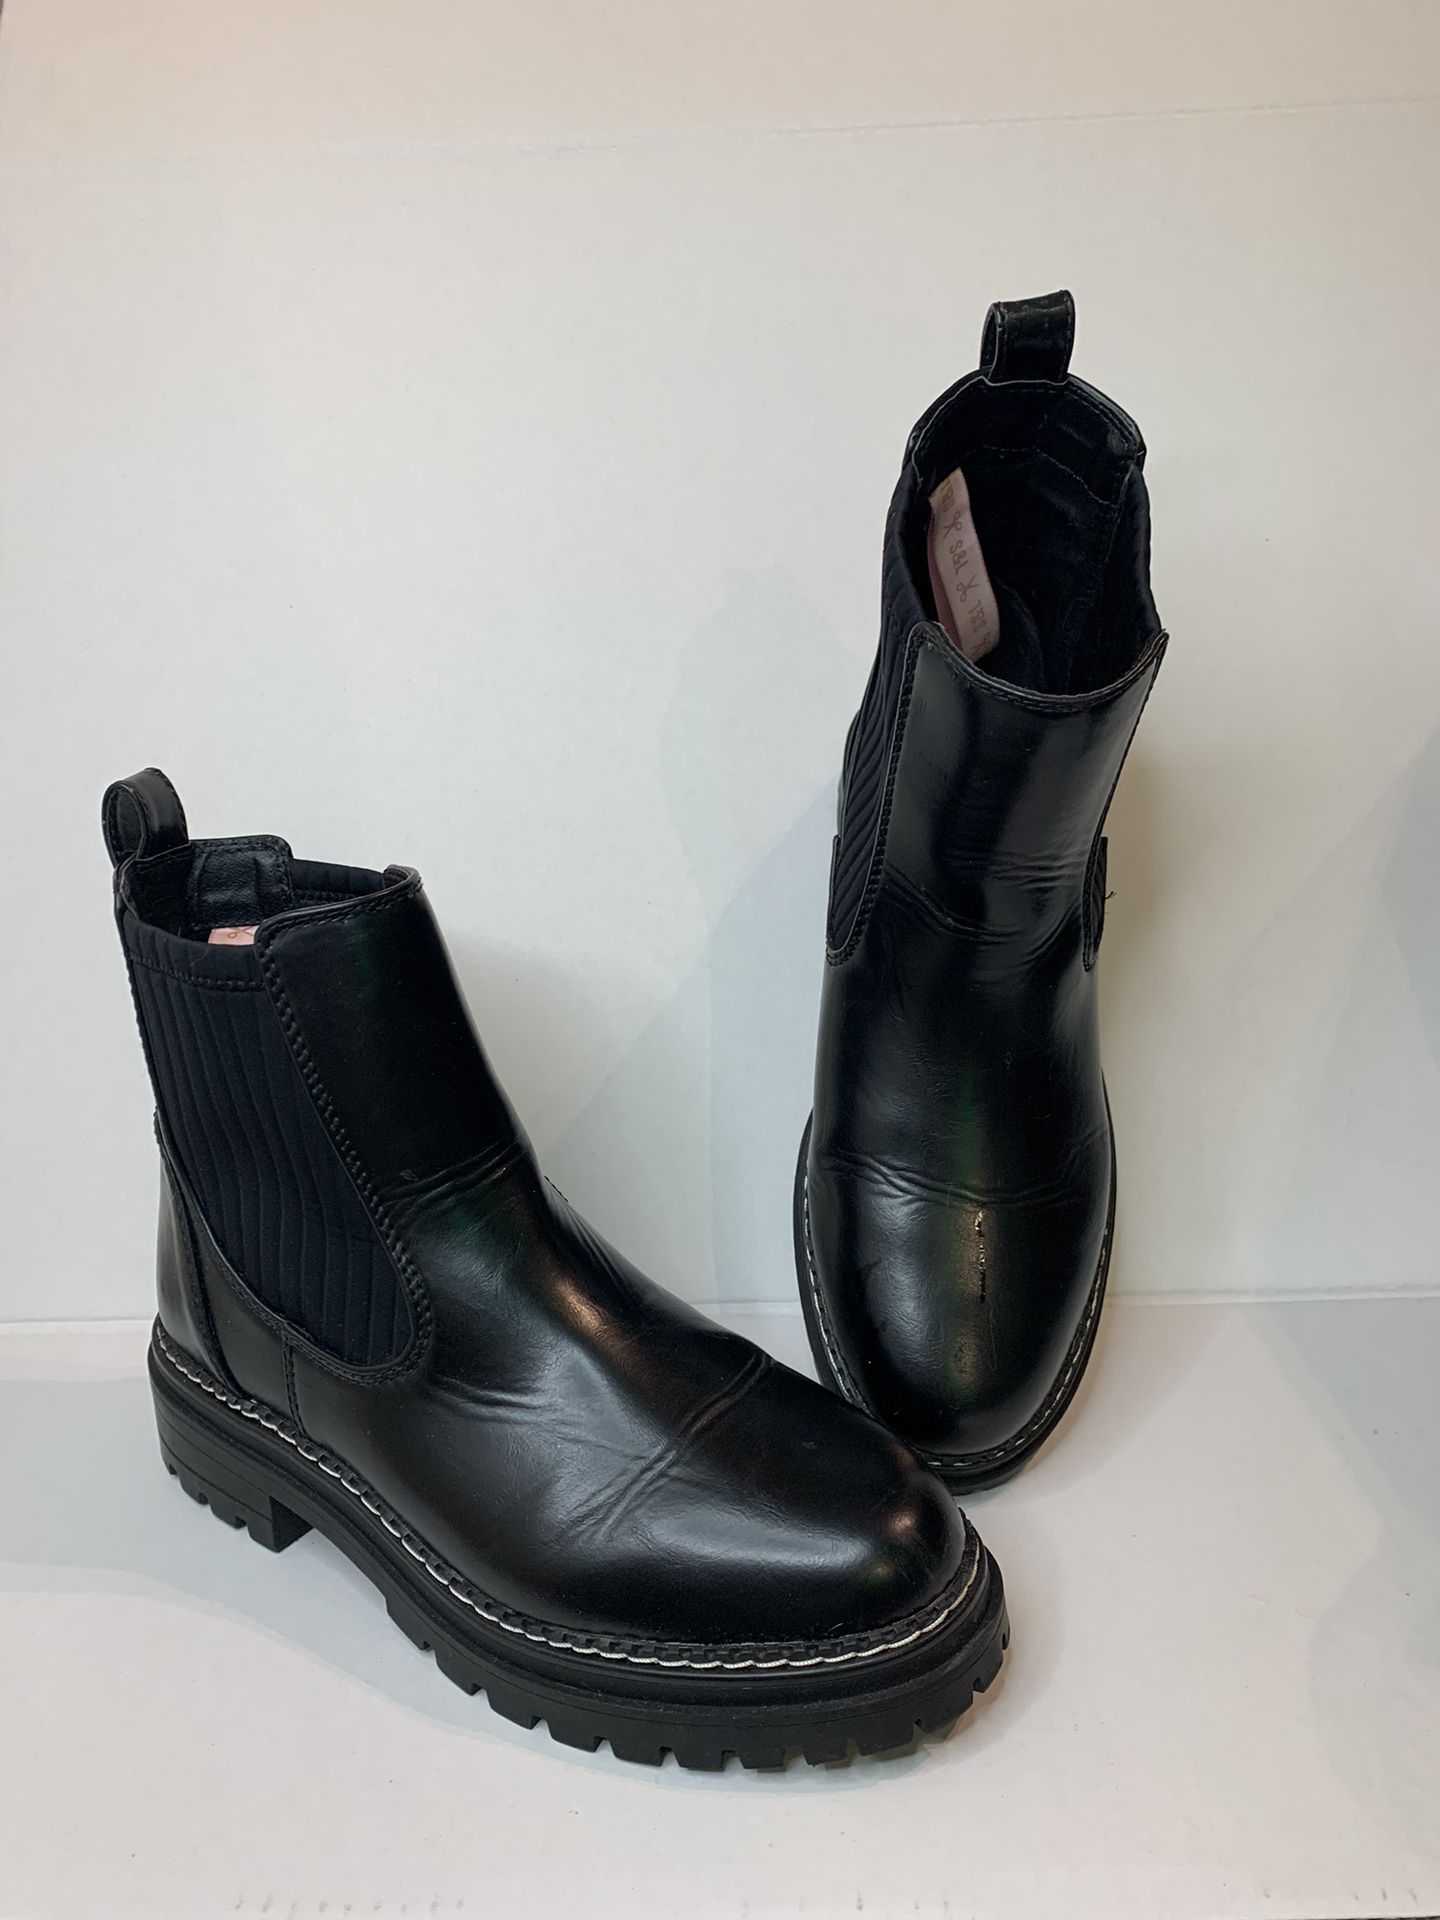 Black skylar boots women size 9 booties. 